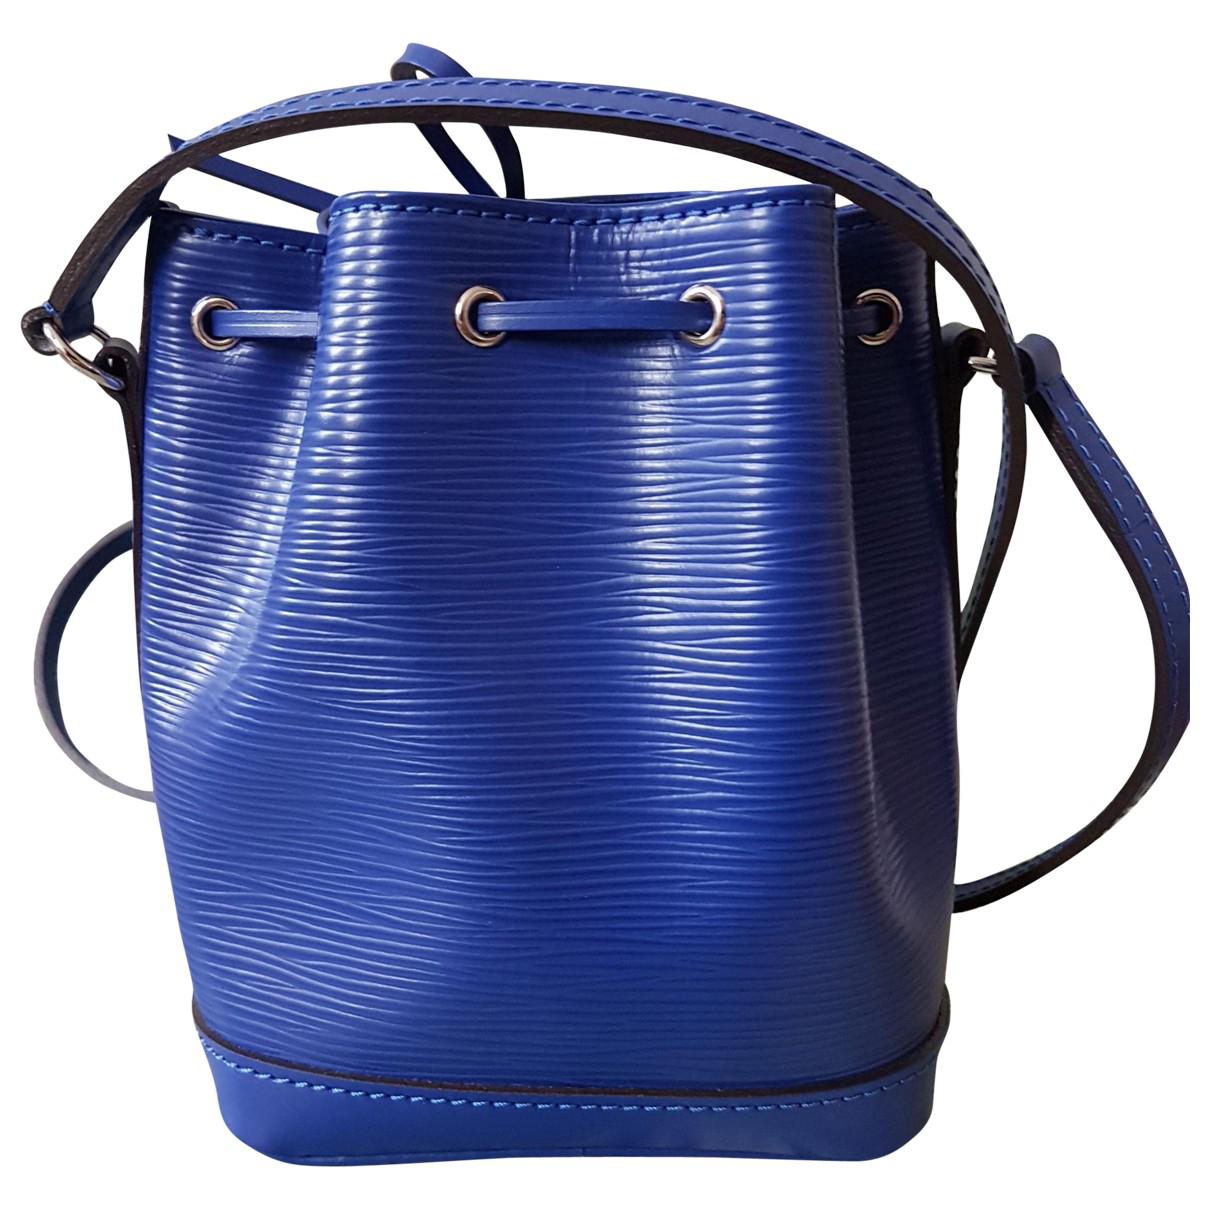 Louis Vuitton Noé Leather Crossbody Bag in Blue - Lyst